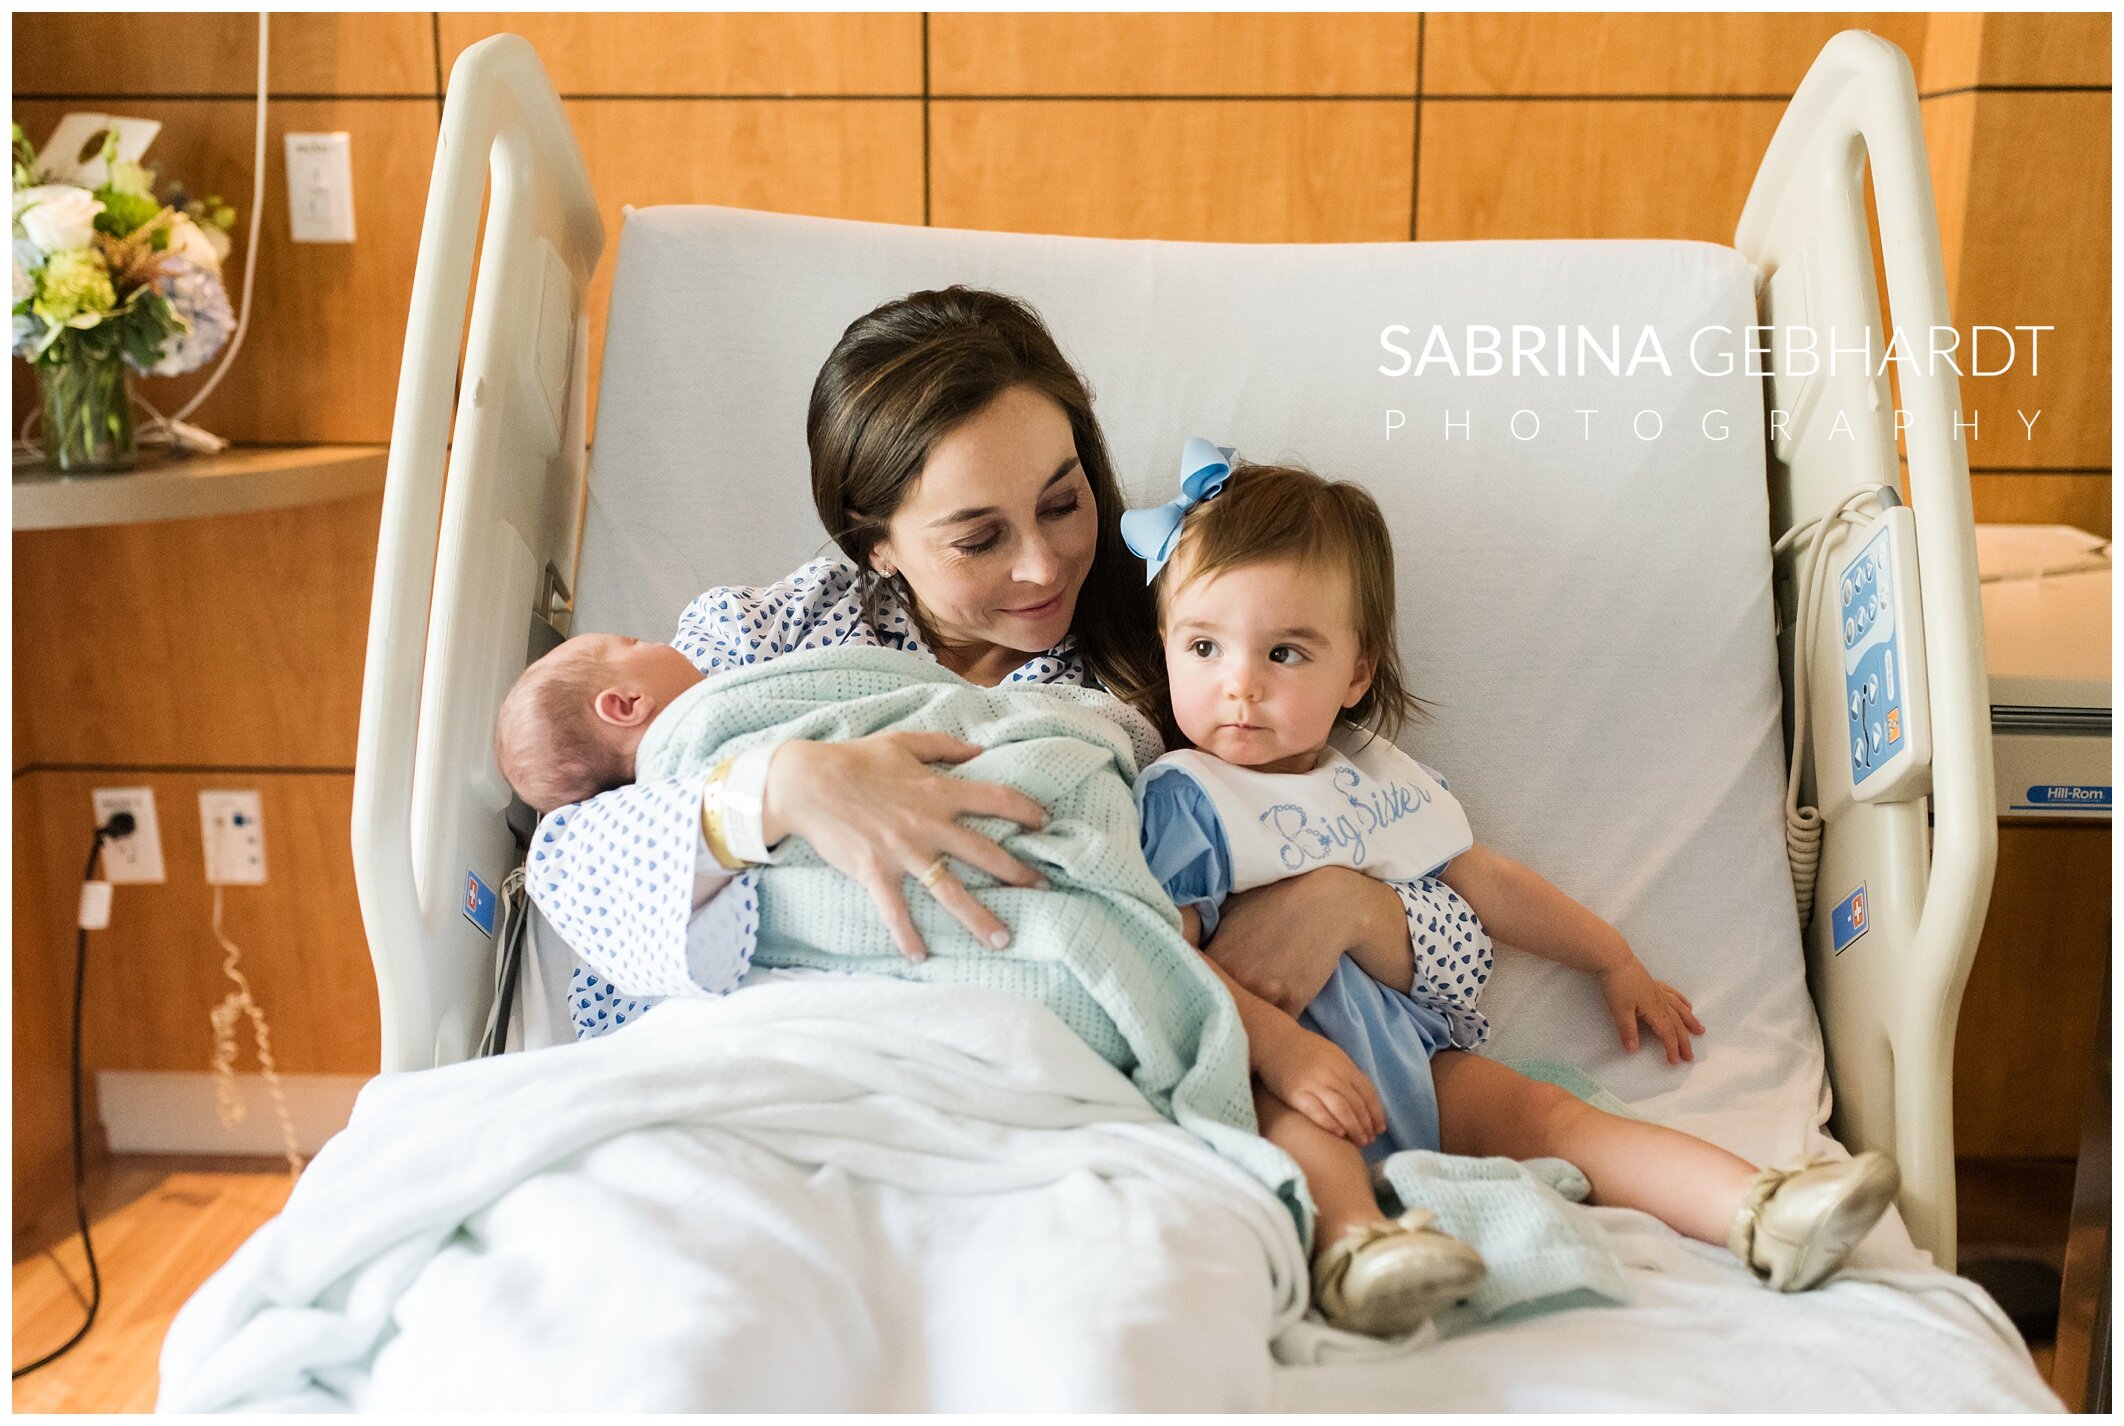 sabrina-gebhardt-fort-worth-lifestyle-family-and-newborn-photographer_2119.jpg